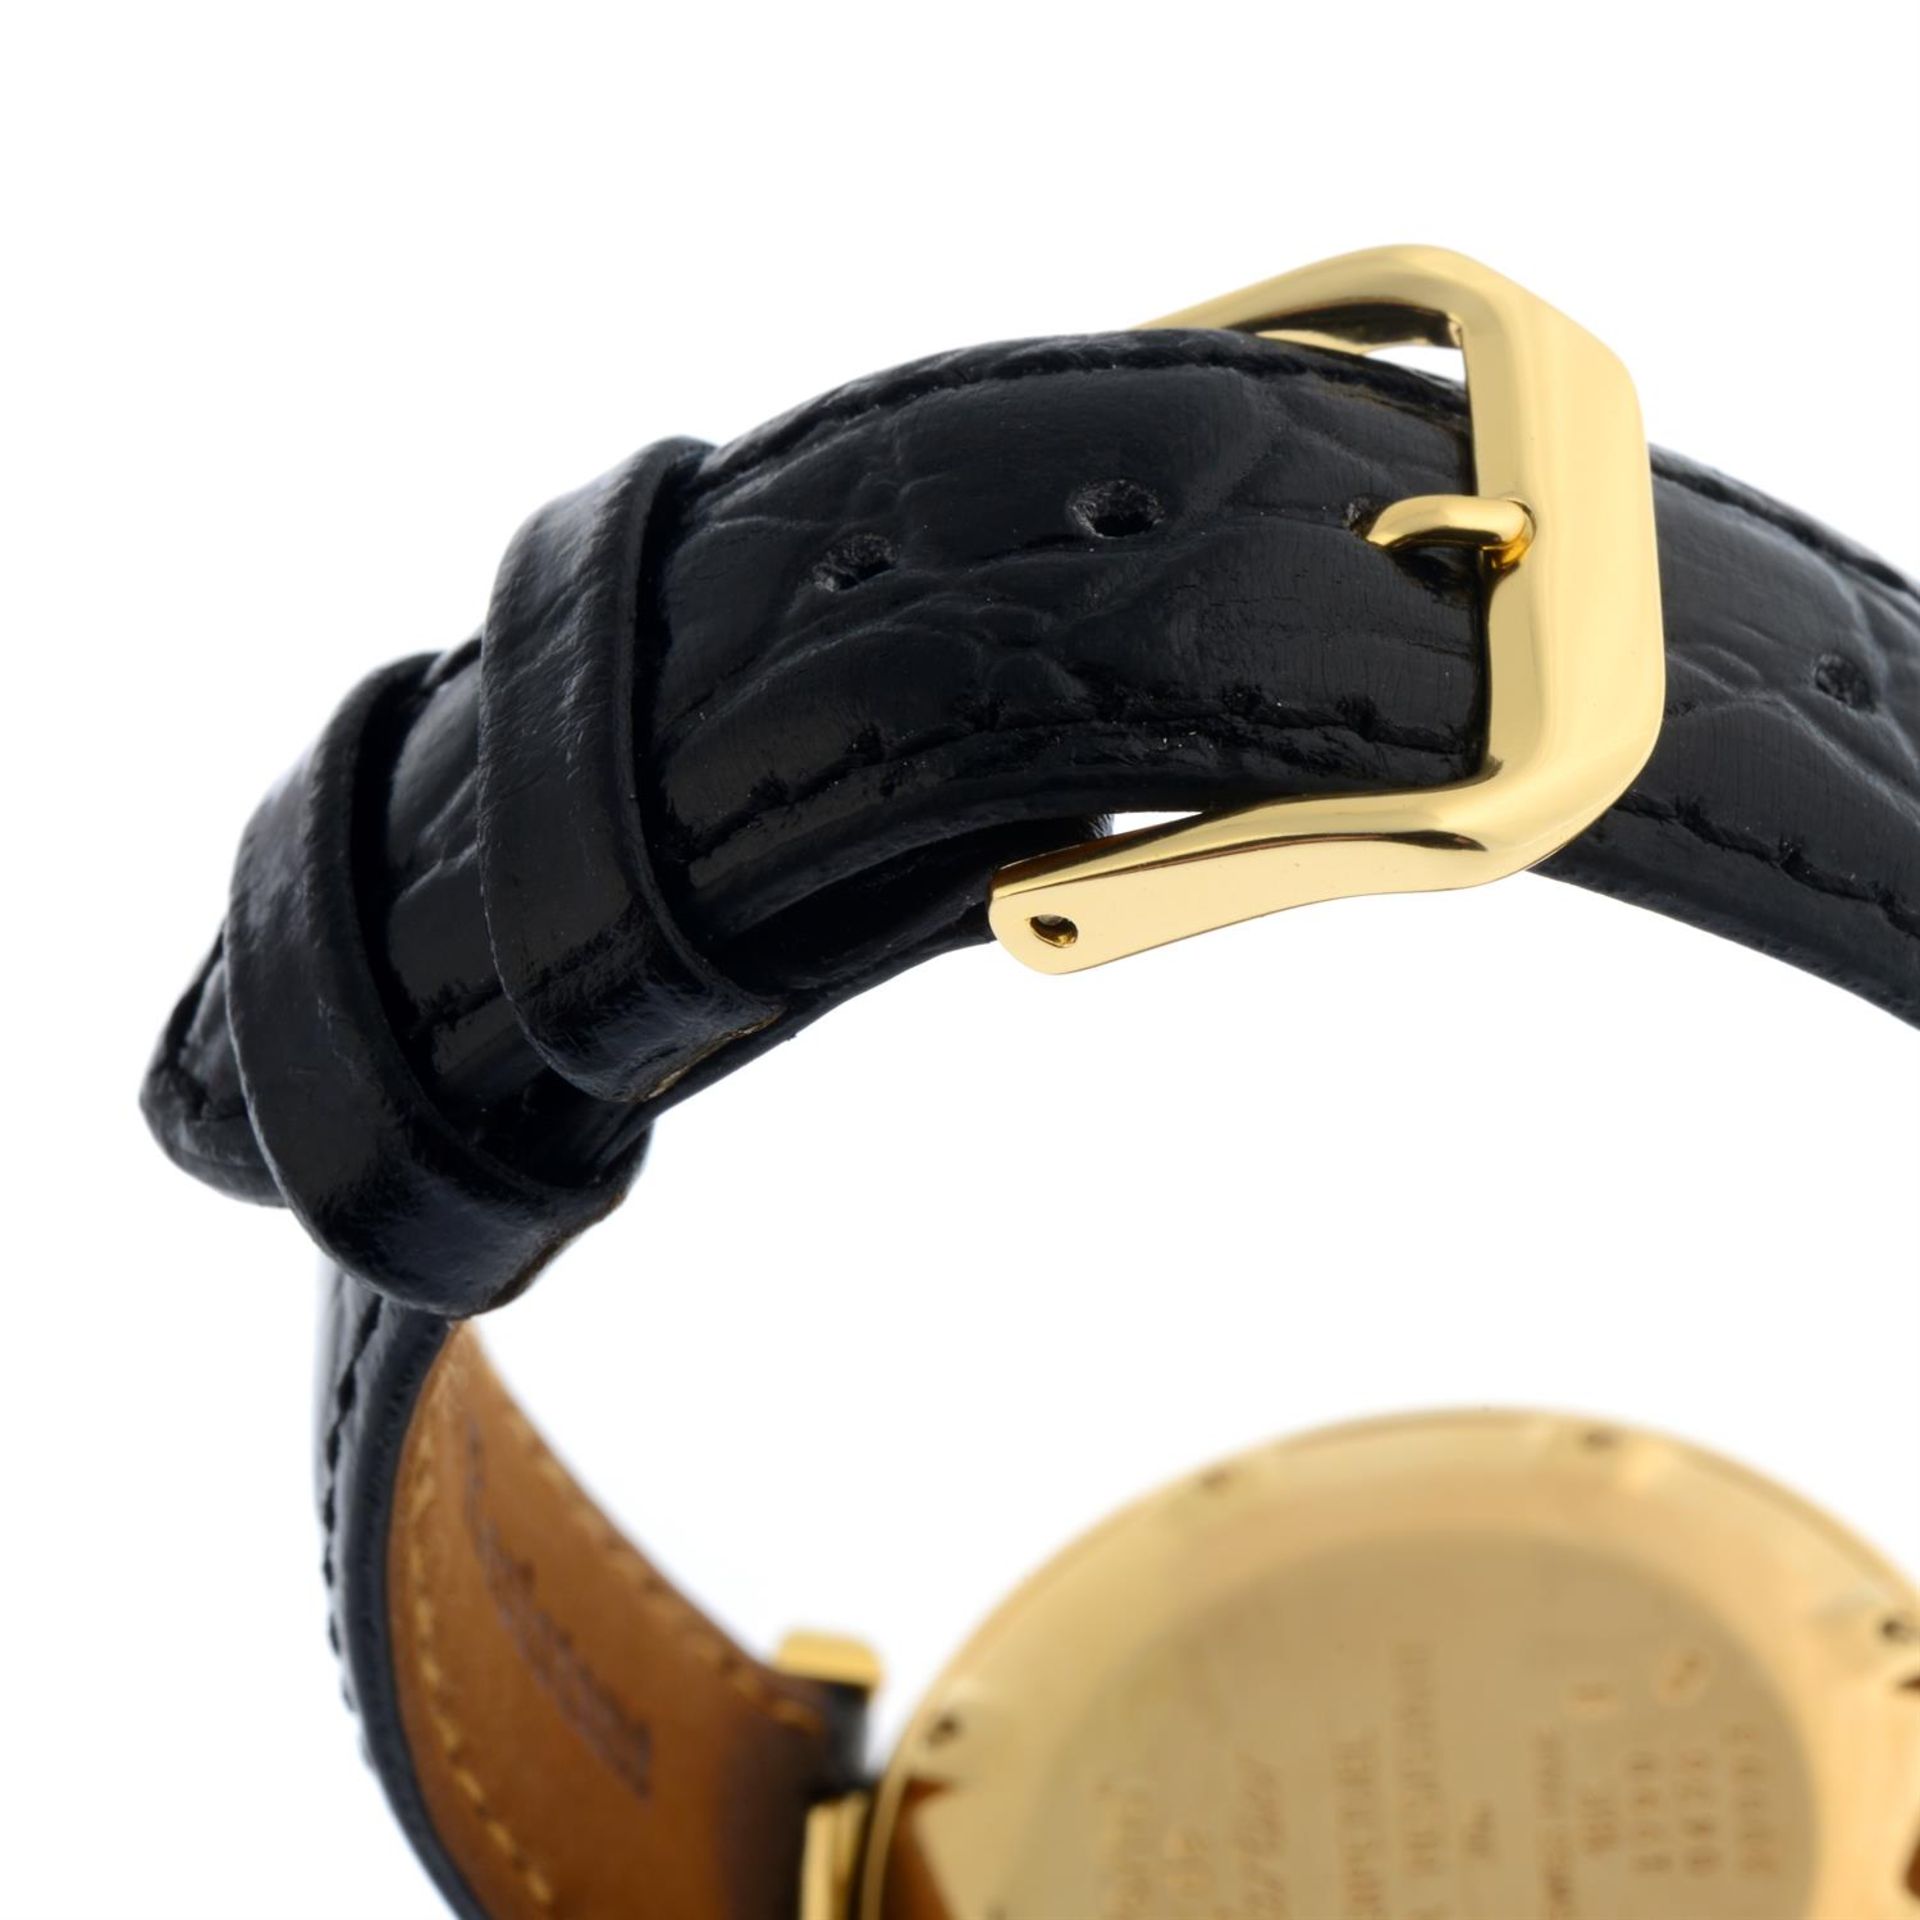 CARTIER - an 18ct yellow gold Pasha Perpetual Calendar wrist watch, 38mm. - Image 3 of 5